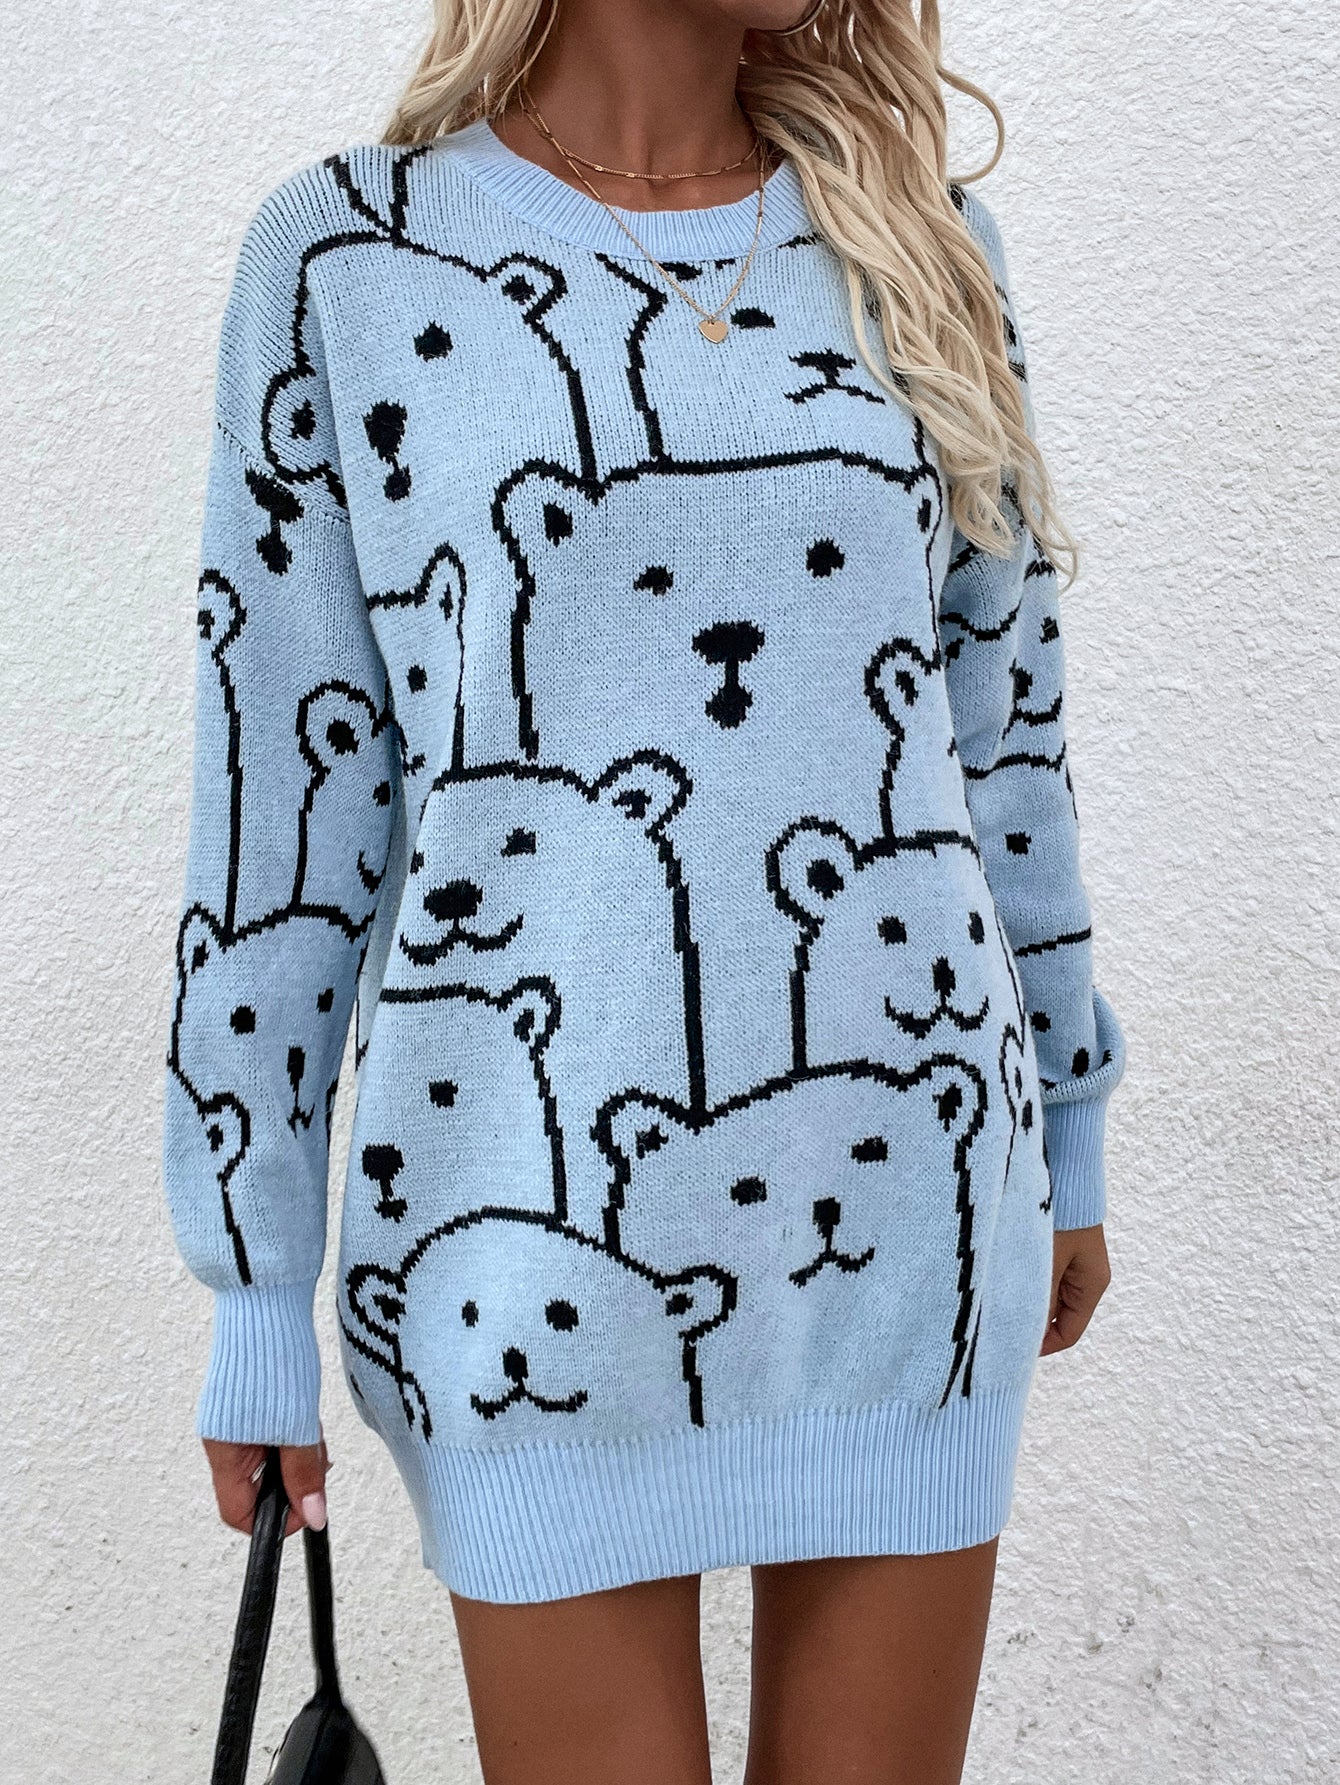 Bear Print Oversize Sweater (2 colors)